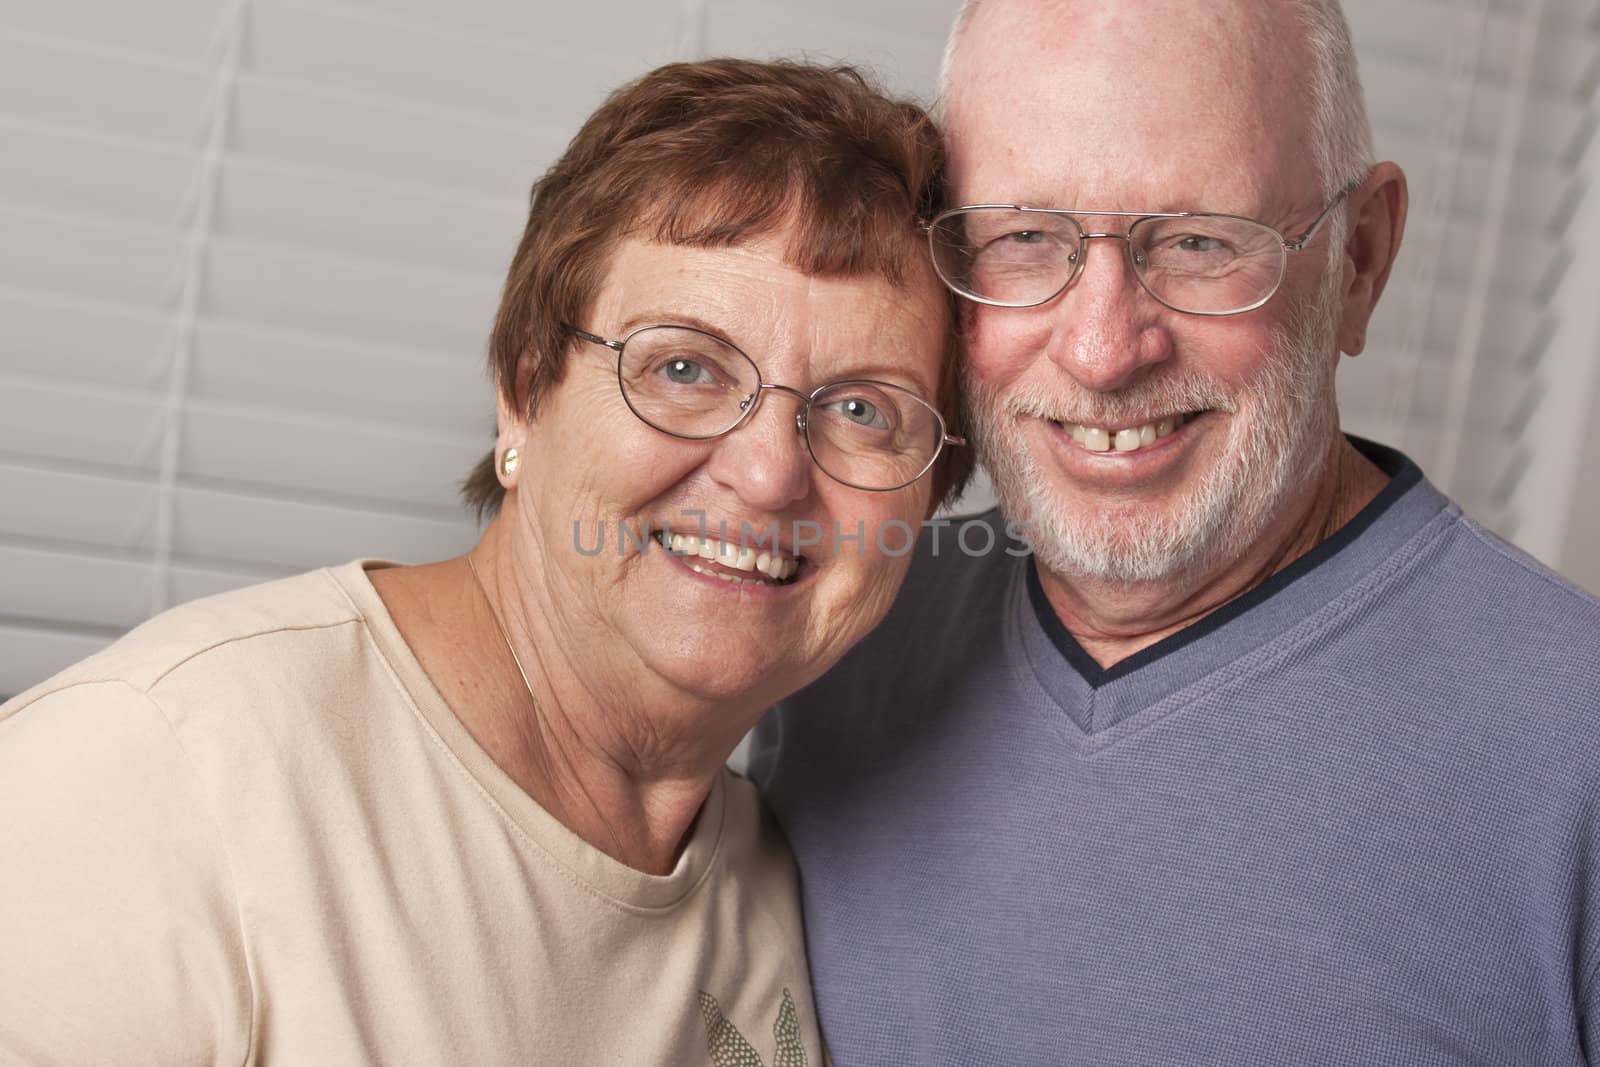 Affectionate Happy Senior Couple Portrait Indoors.